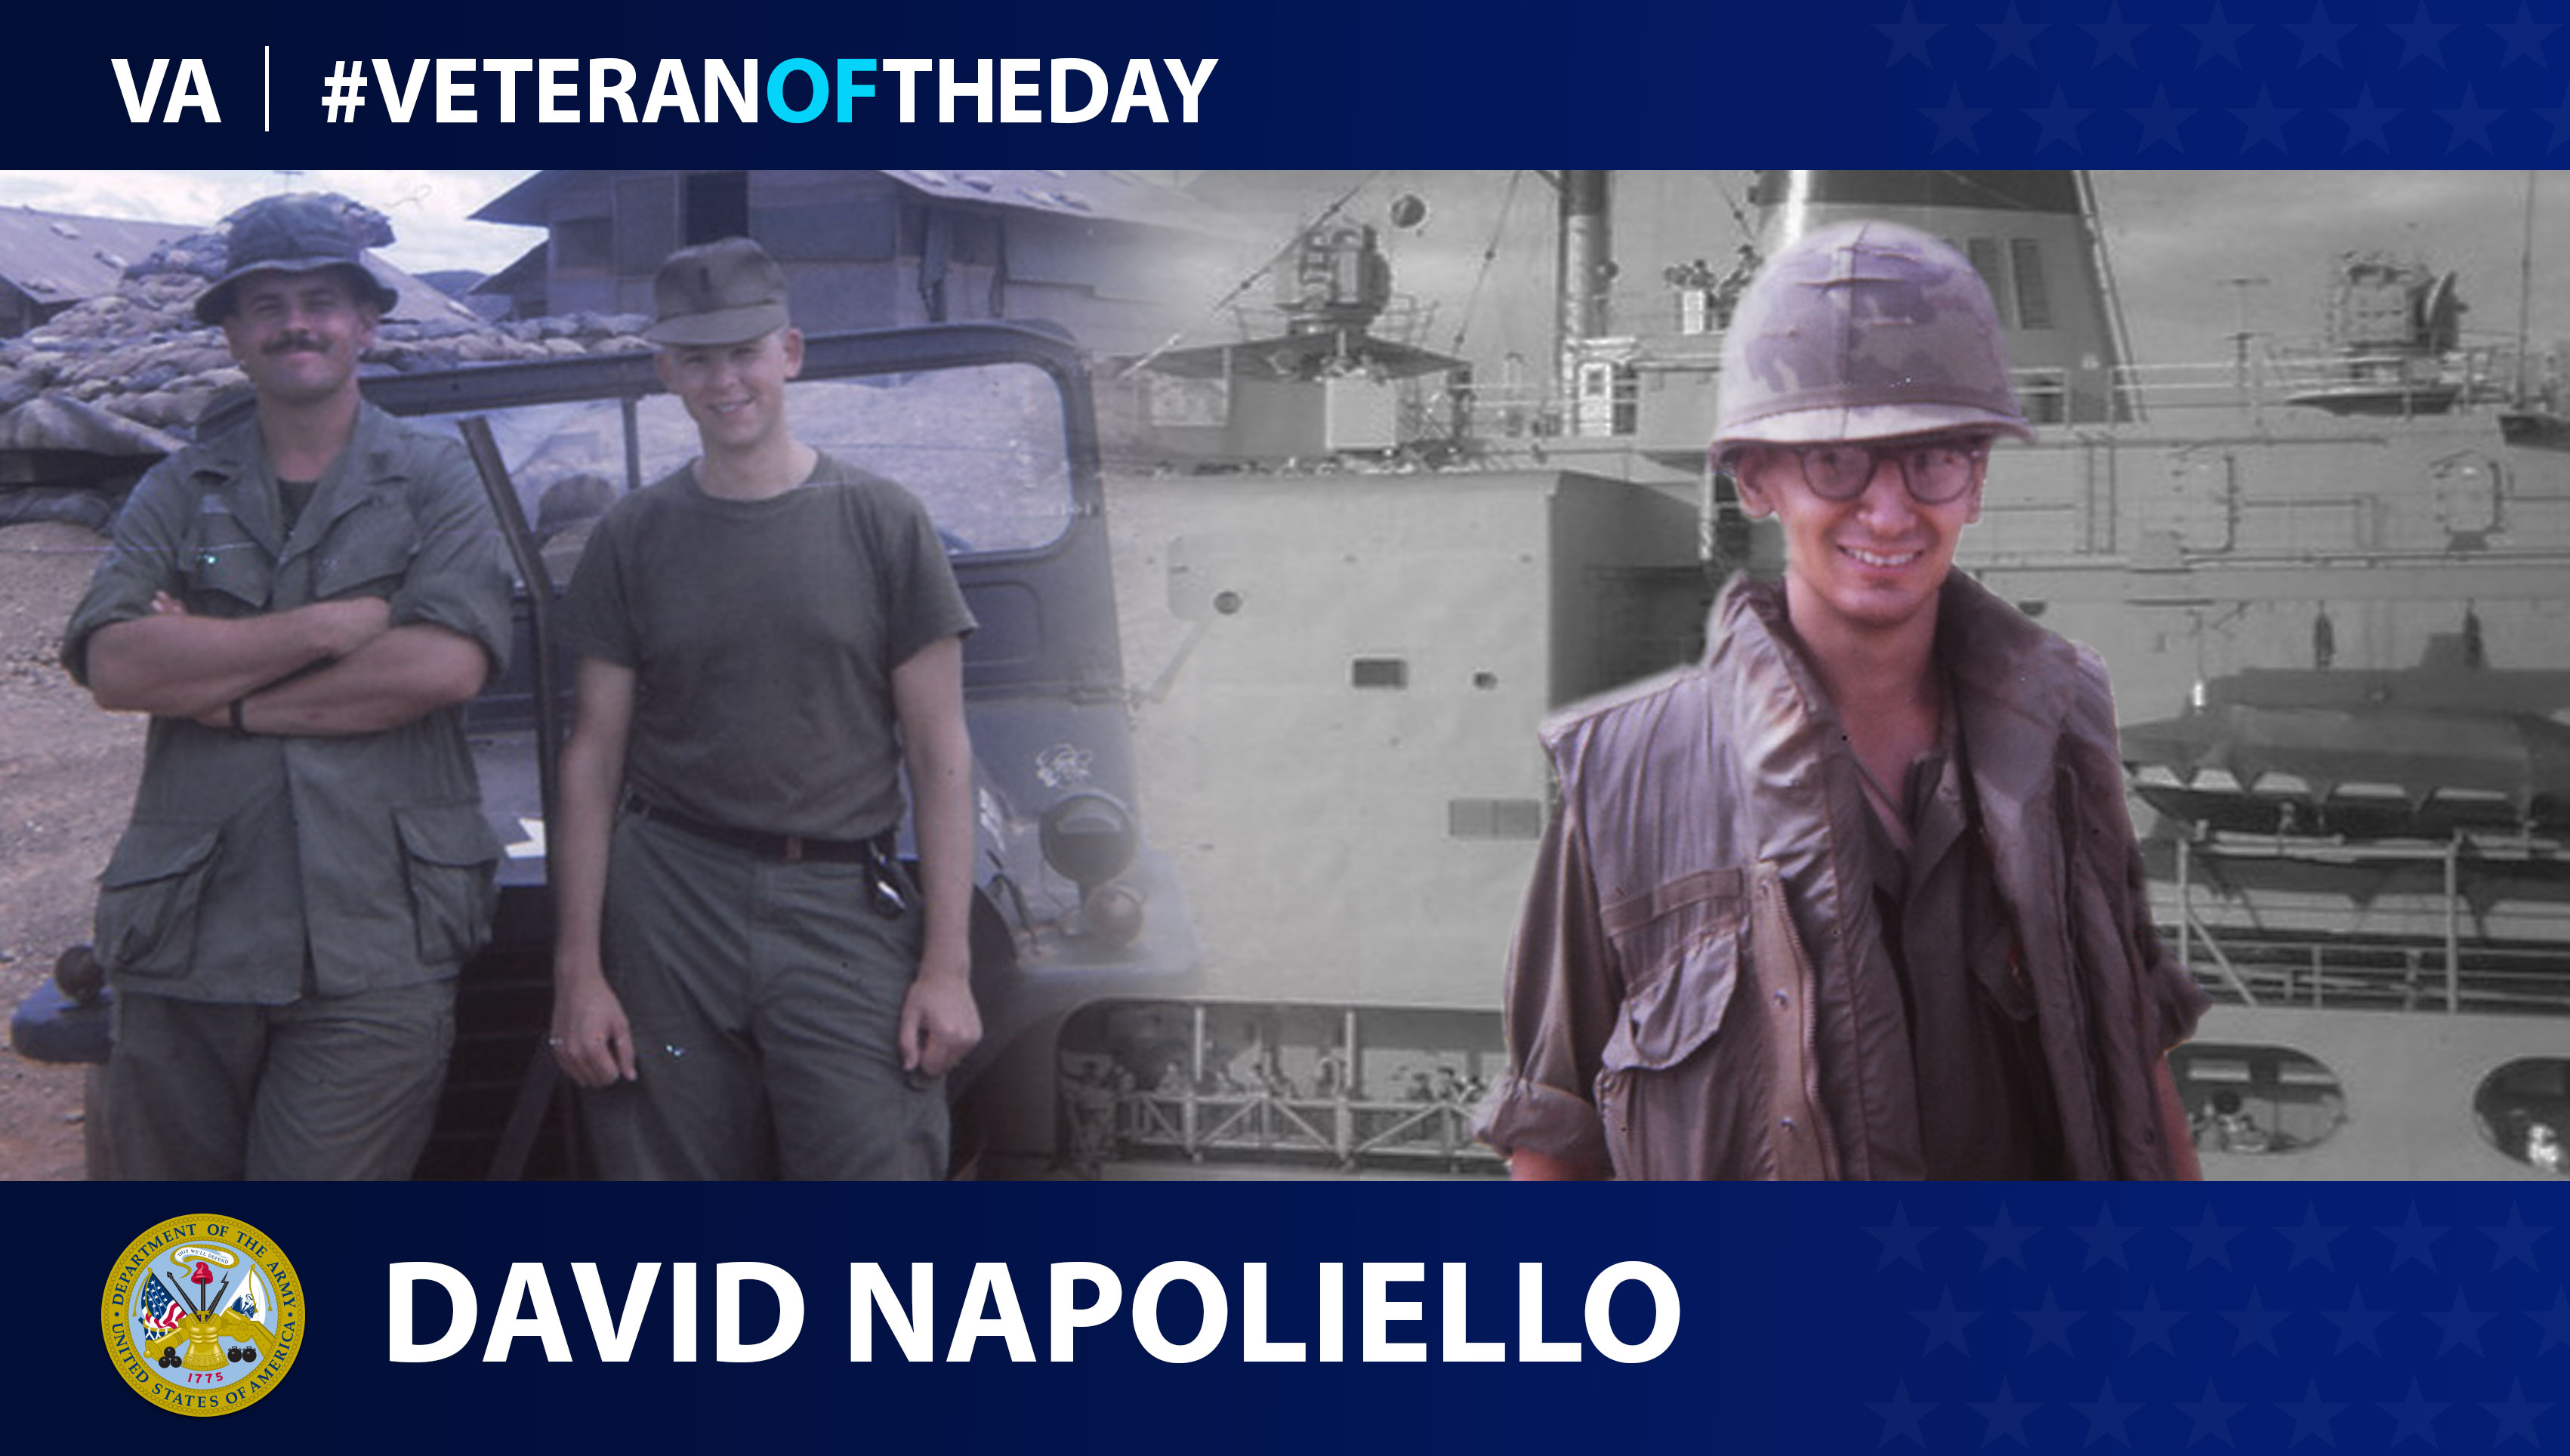 Army Veteran David Napoliello is today's Veteran of the Day.